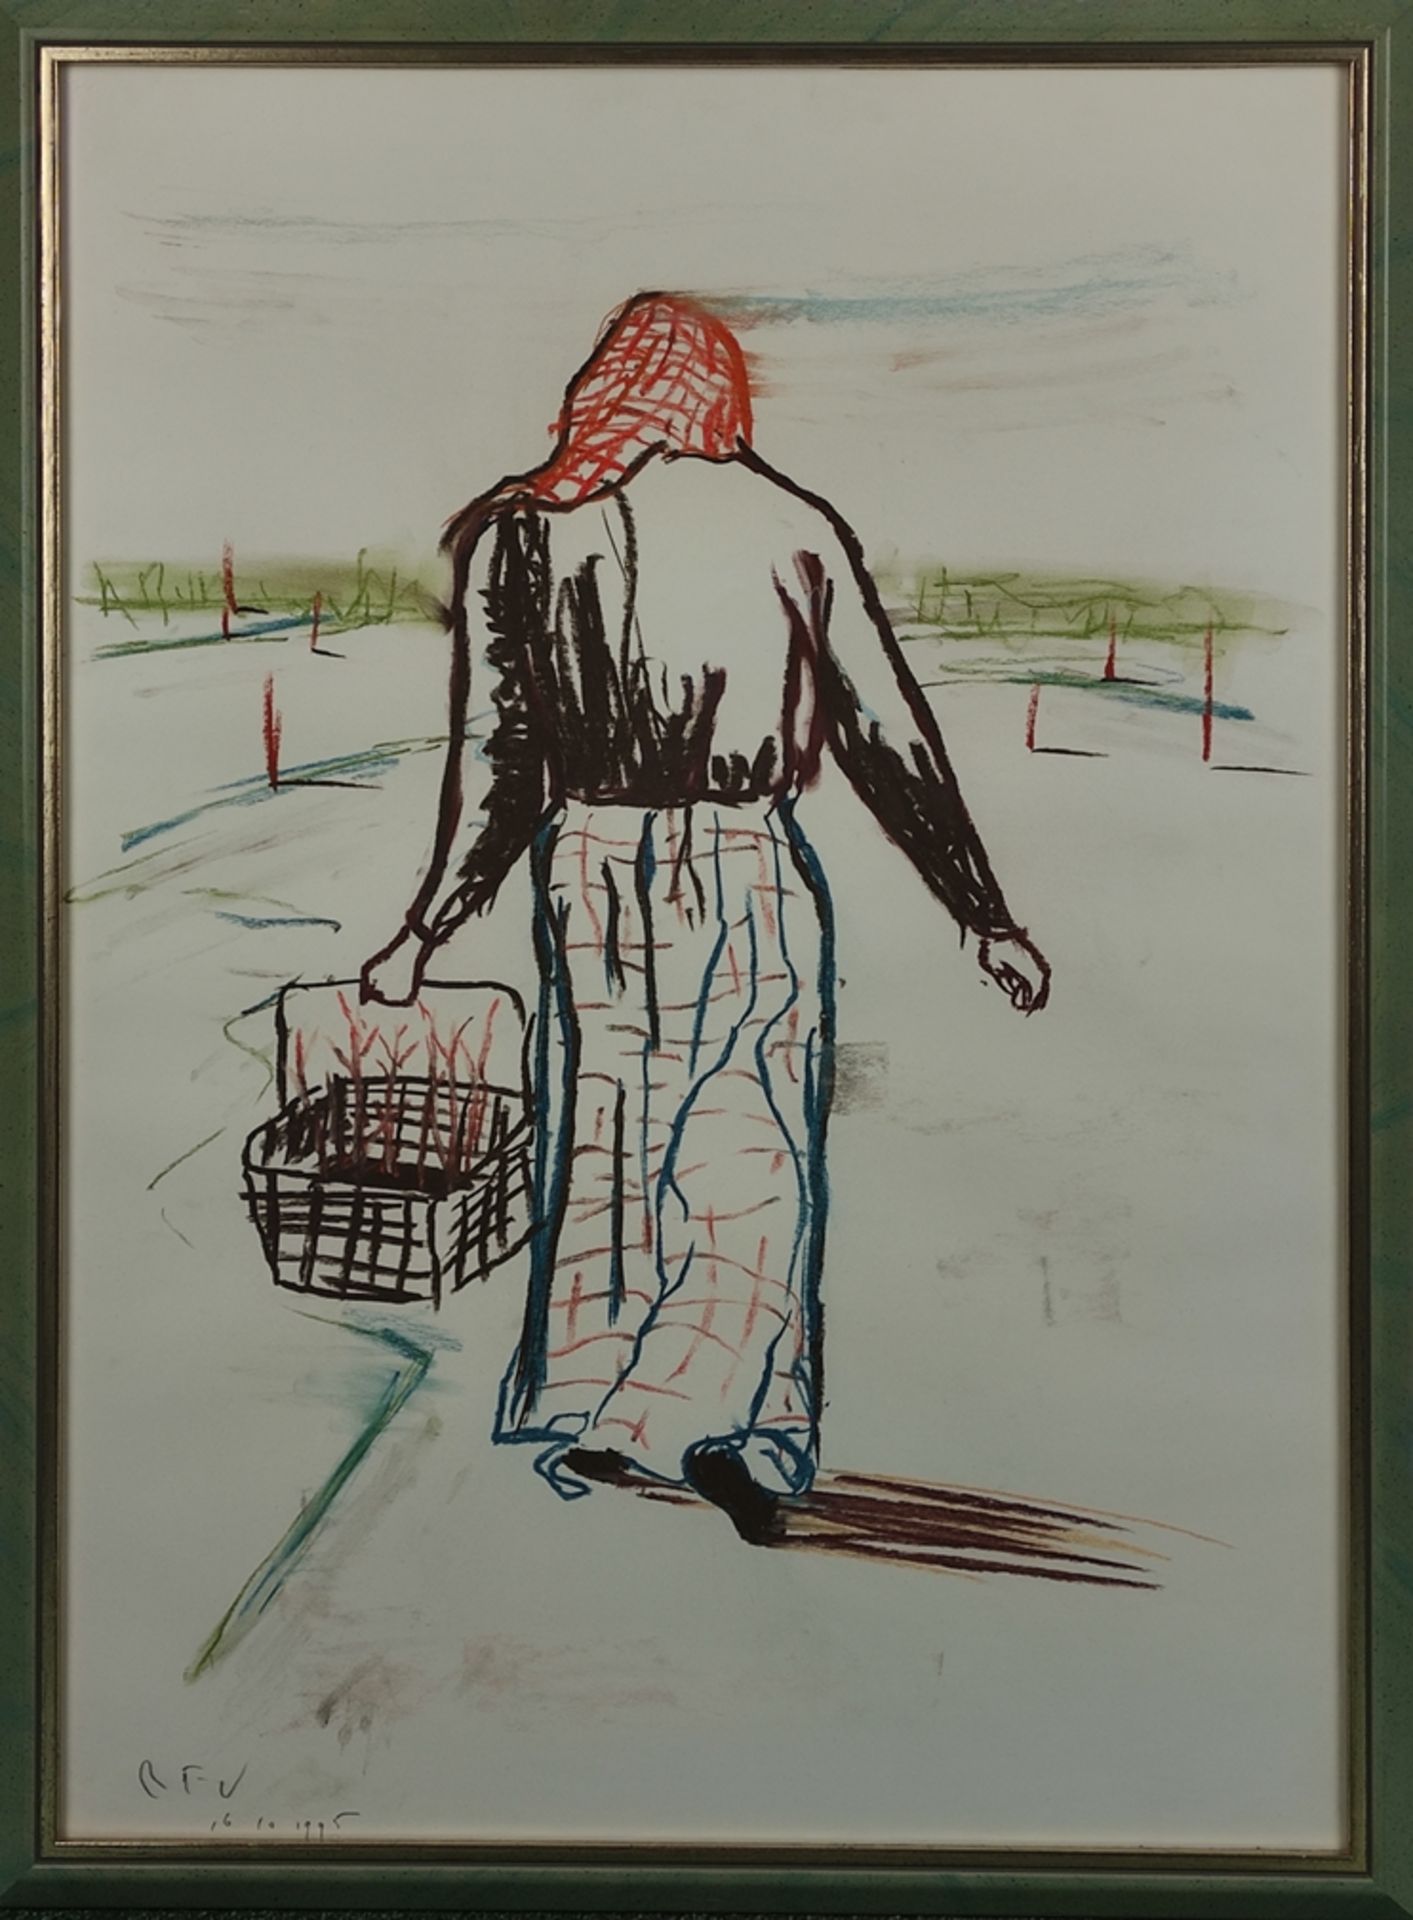 Versloot, Ronald (1964 Apeldoorn) "Frau mit Korb", Wachsmalkreide auf Papier, links unten monogramm - Bild 2 aus 3